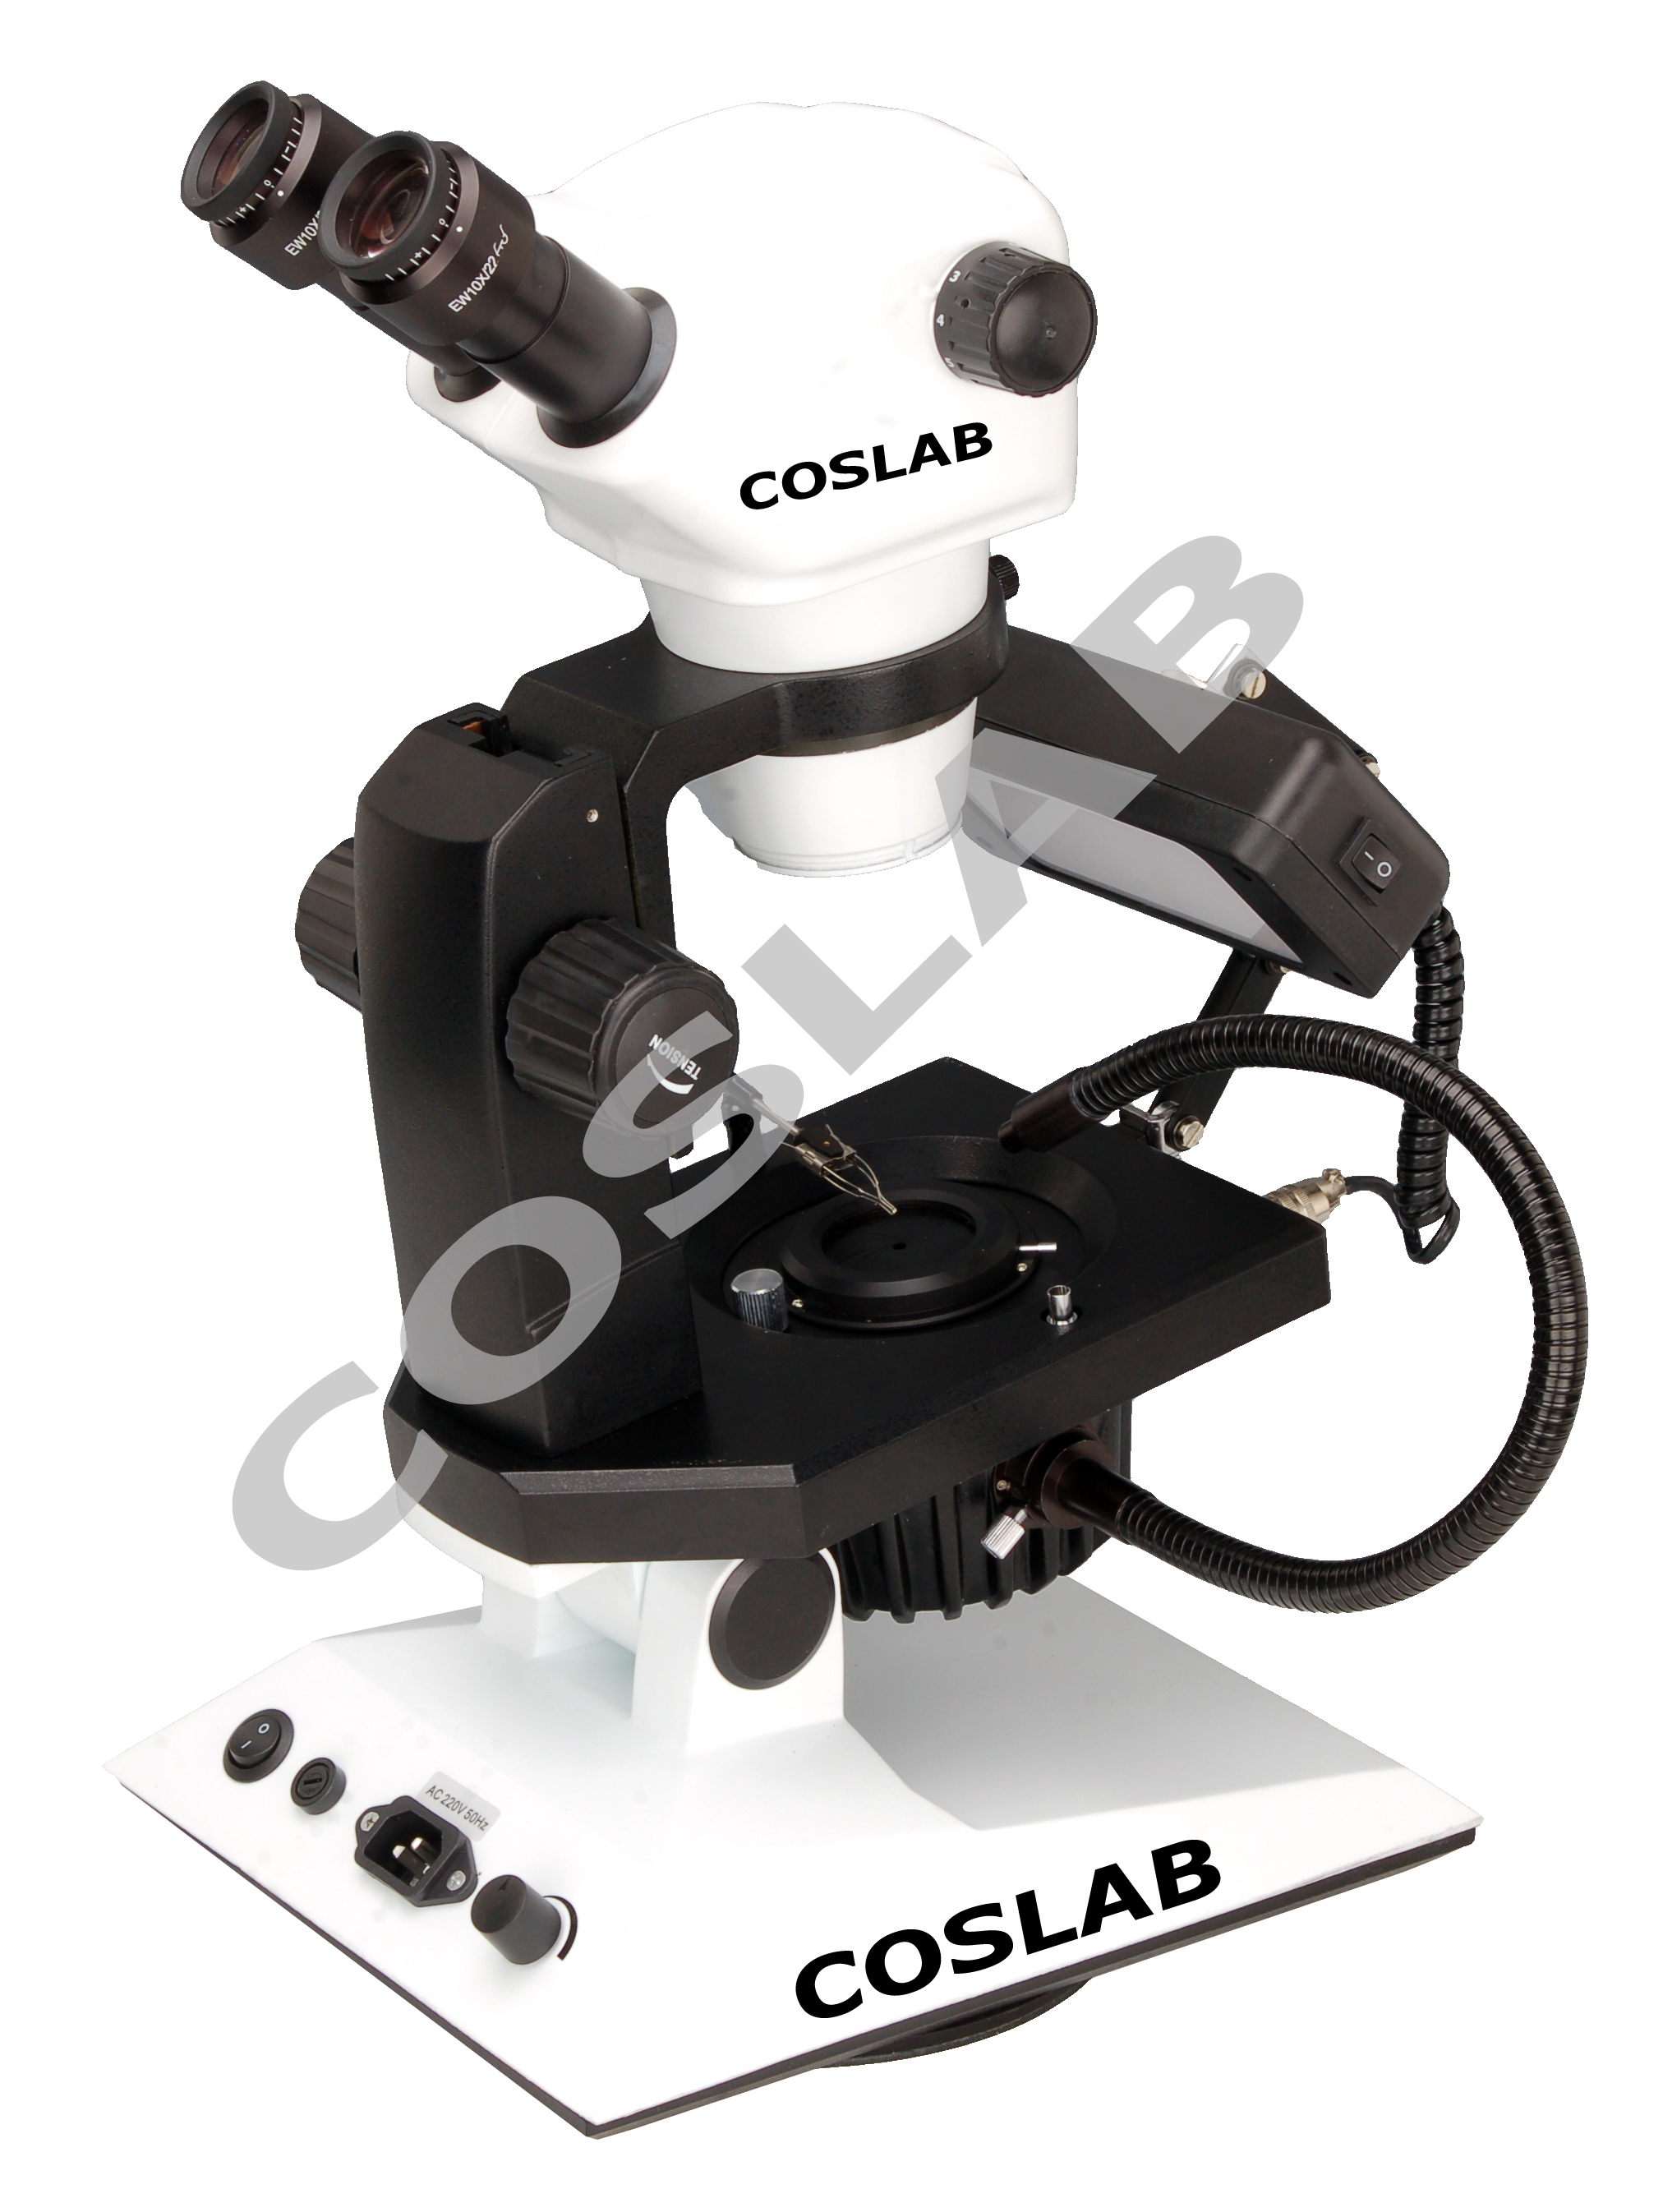 CGM-6 Professional Gem Microscope